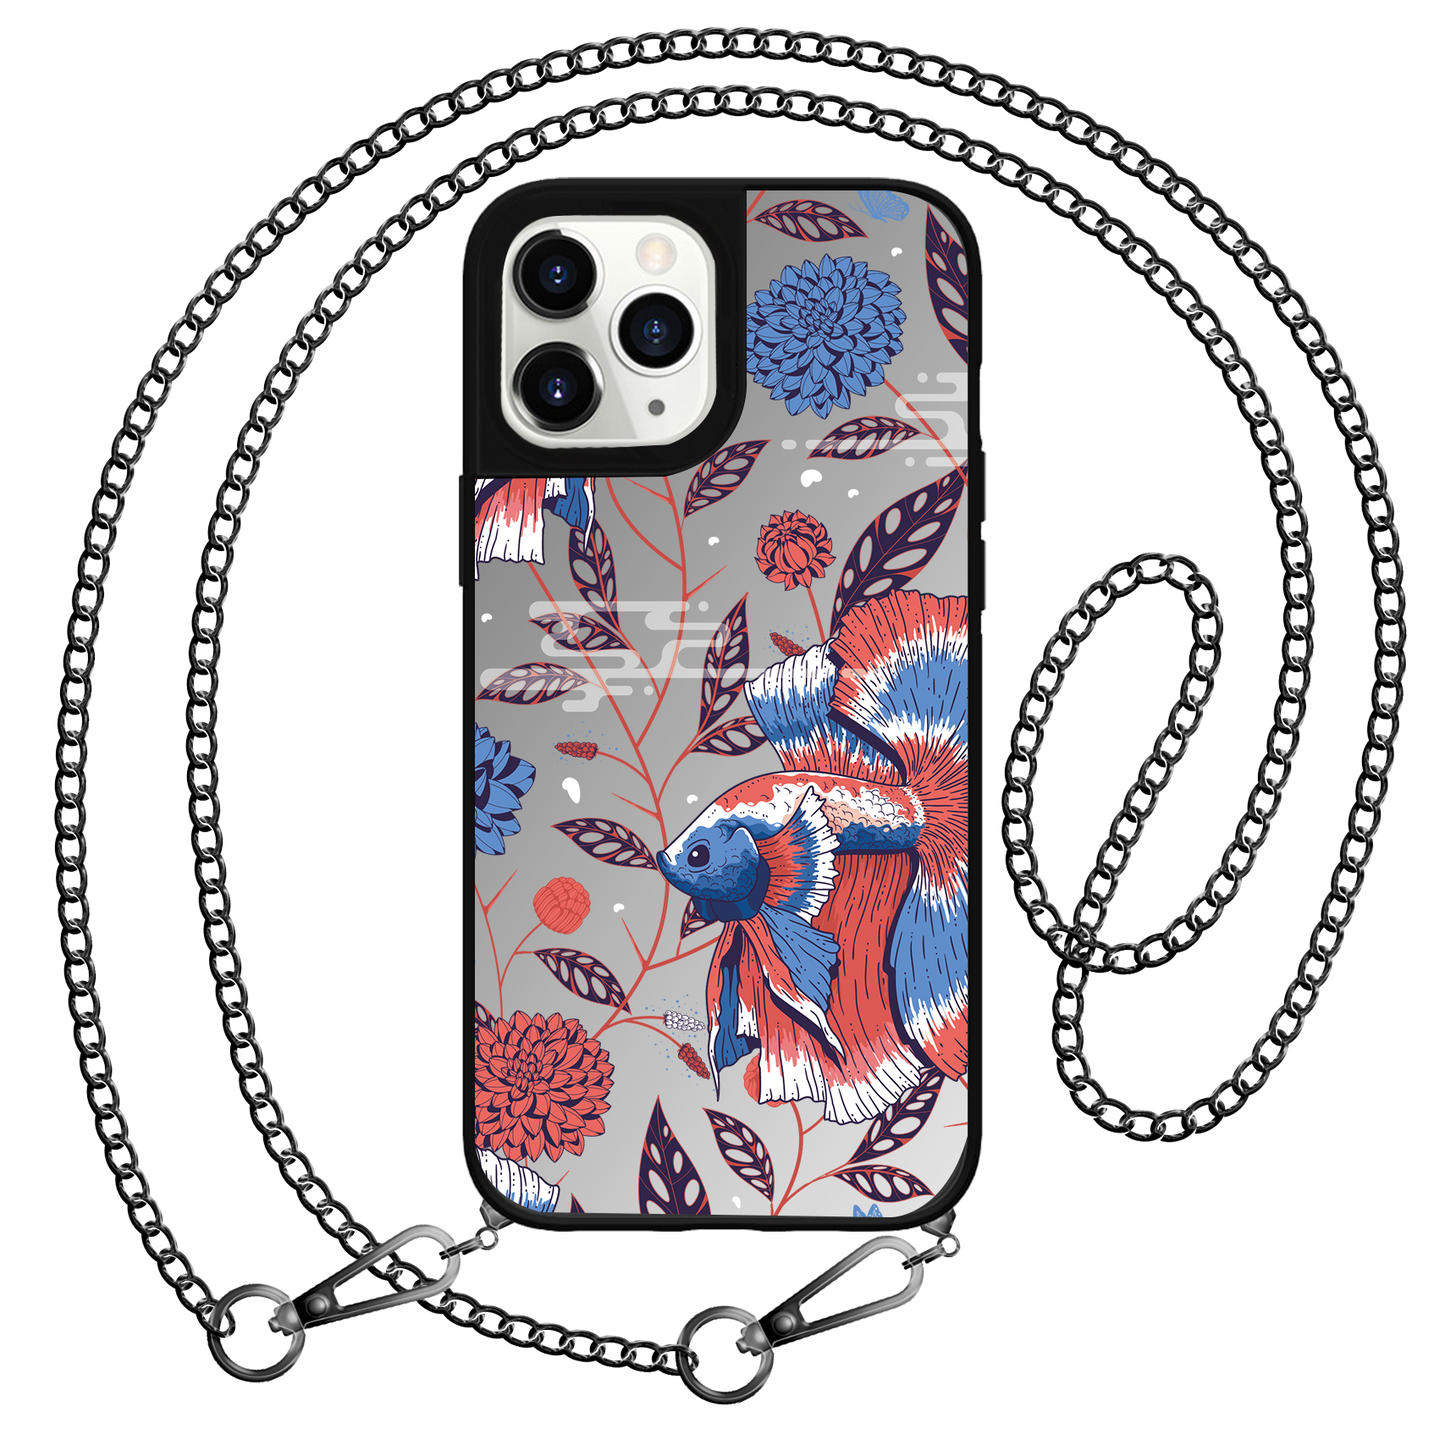 iPhone Mirror Grip Case - Fish & Floral 2.0